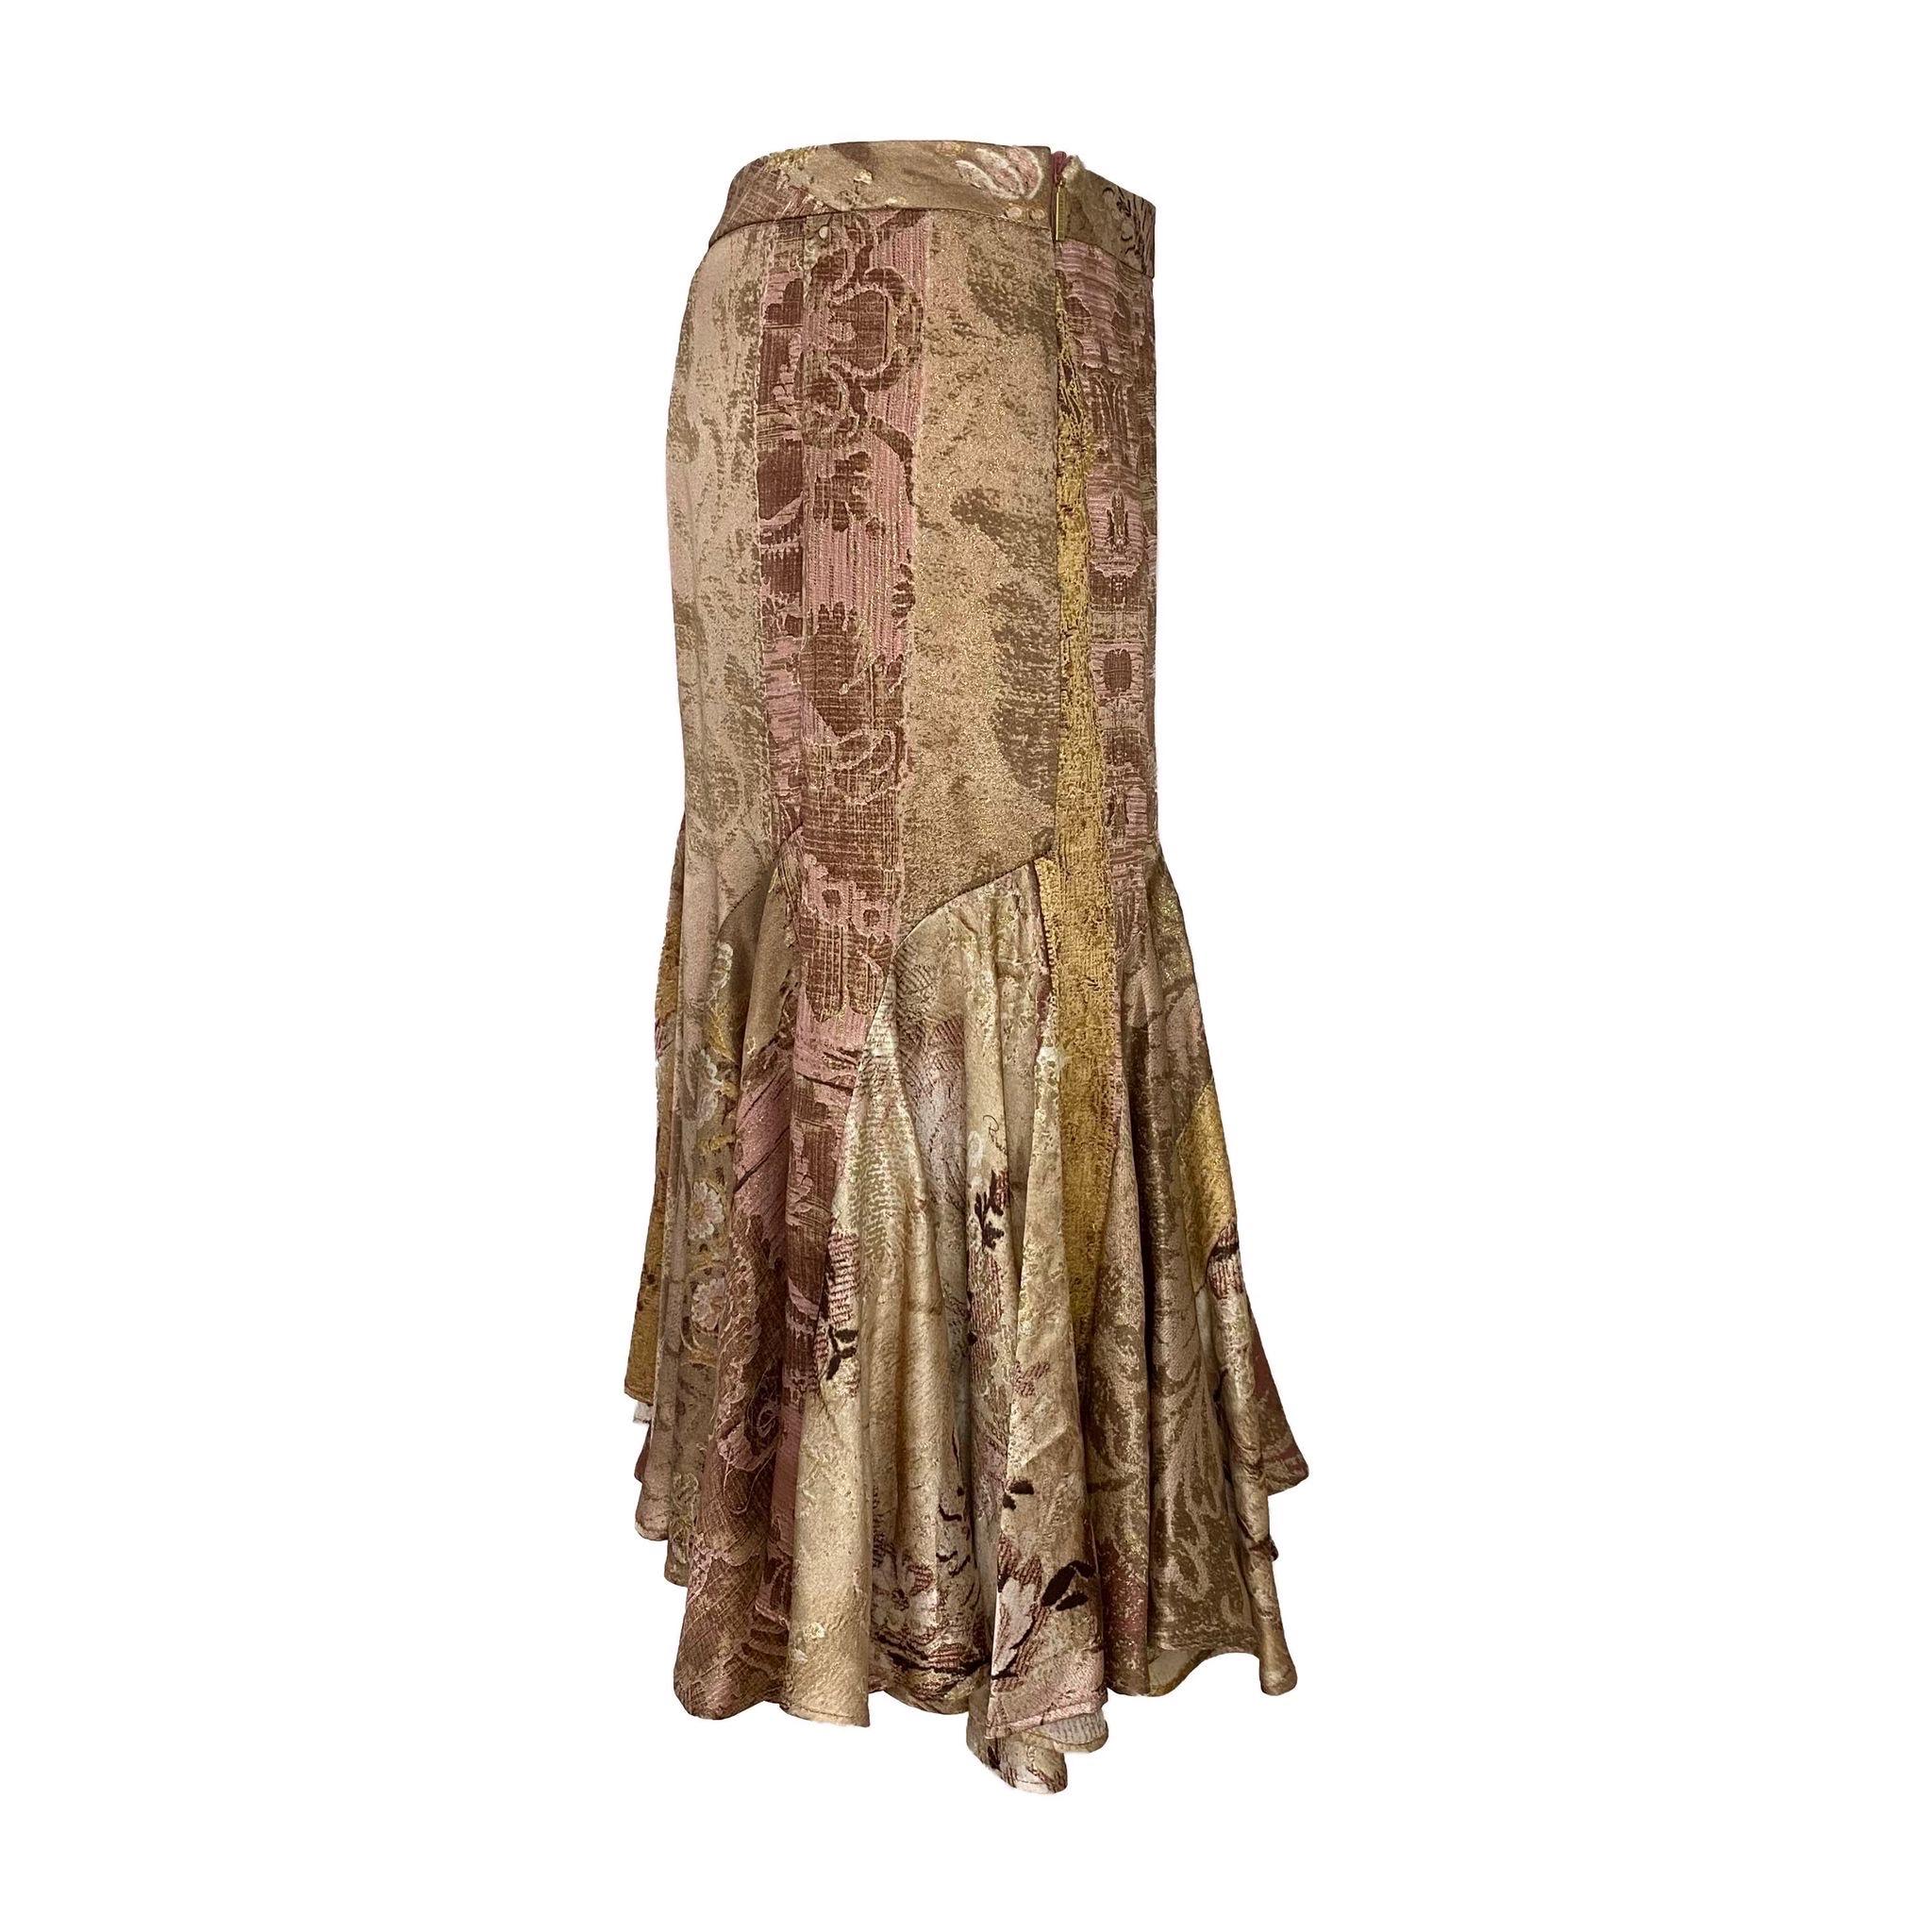 Roberto Cavalli godet midi skirt from Fall/Winter 2004 collection. Patchwork brocade print, 100% silk. 

Size 40
Waistline: 72 cm/ 28.3 inch
Length: 62 cm/ 24.4 inch